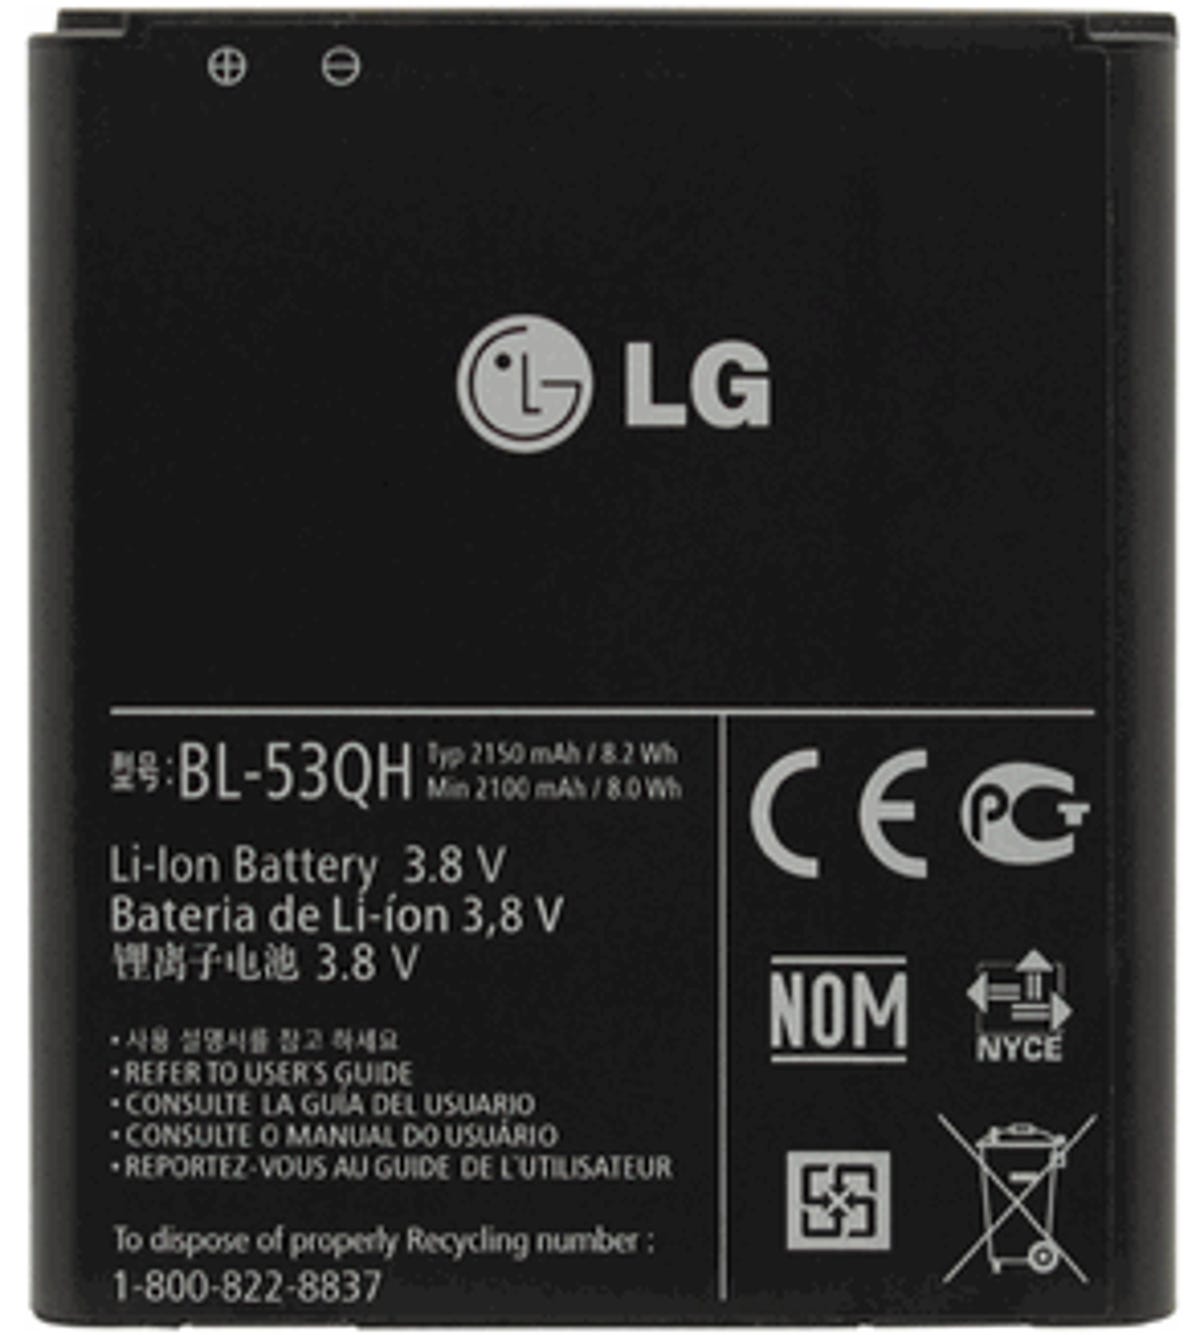 LG battery